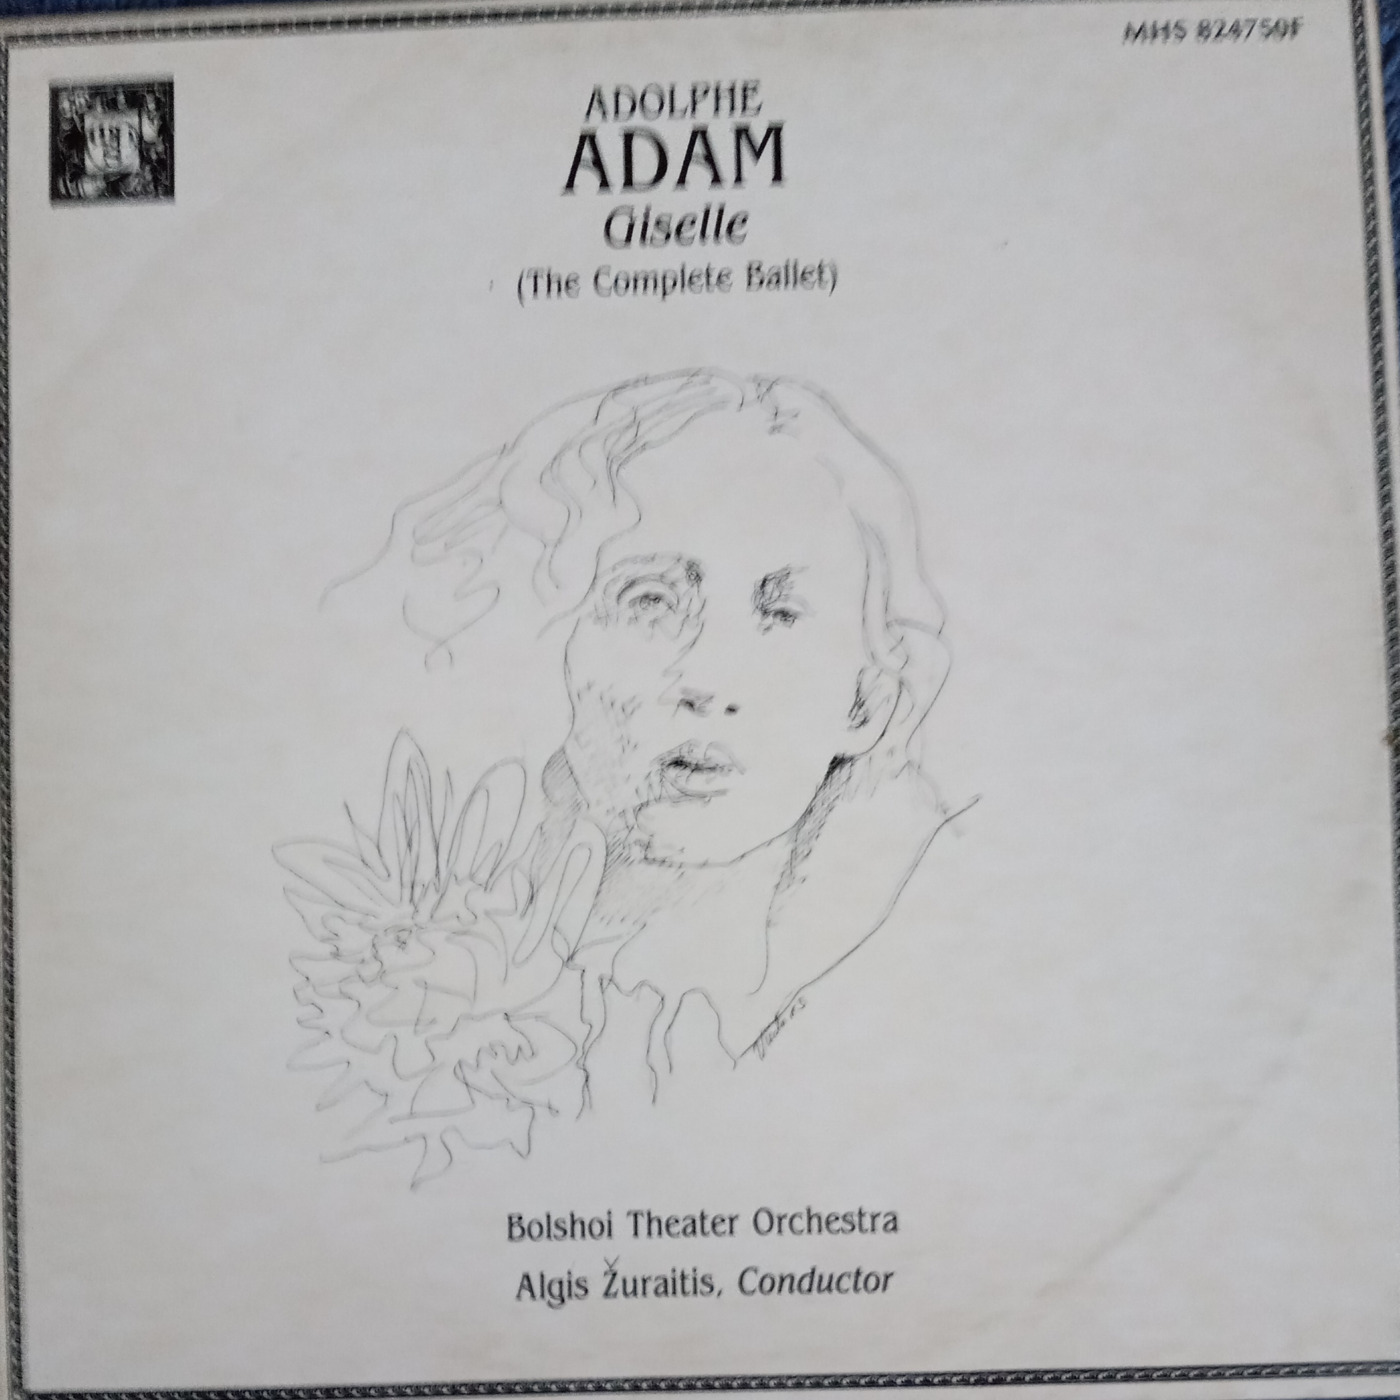 Episode 25: 18025 Adam: Giselle